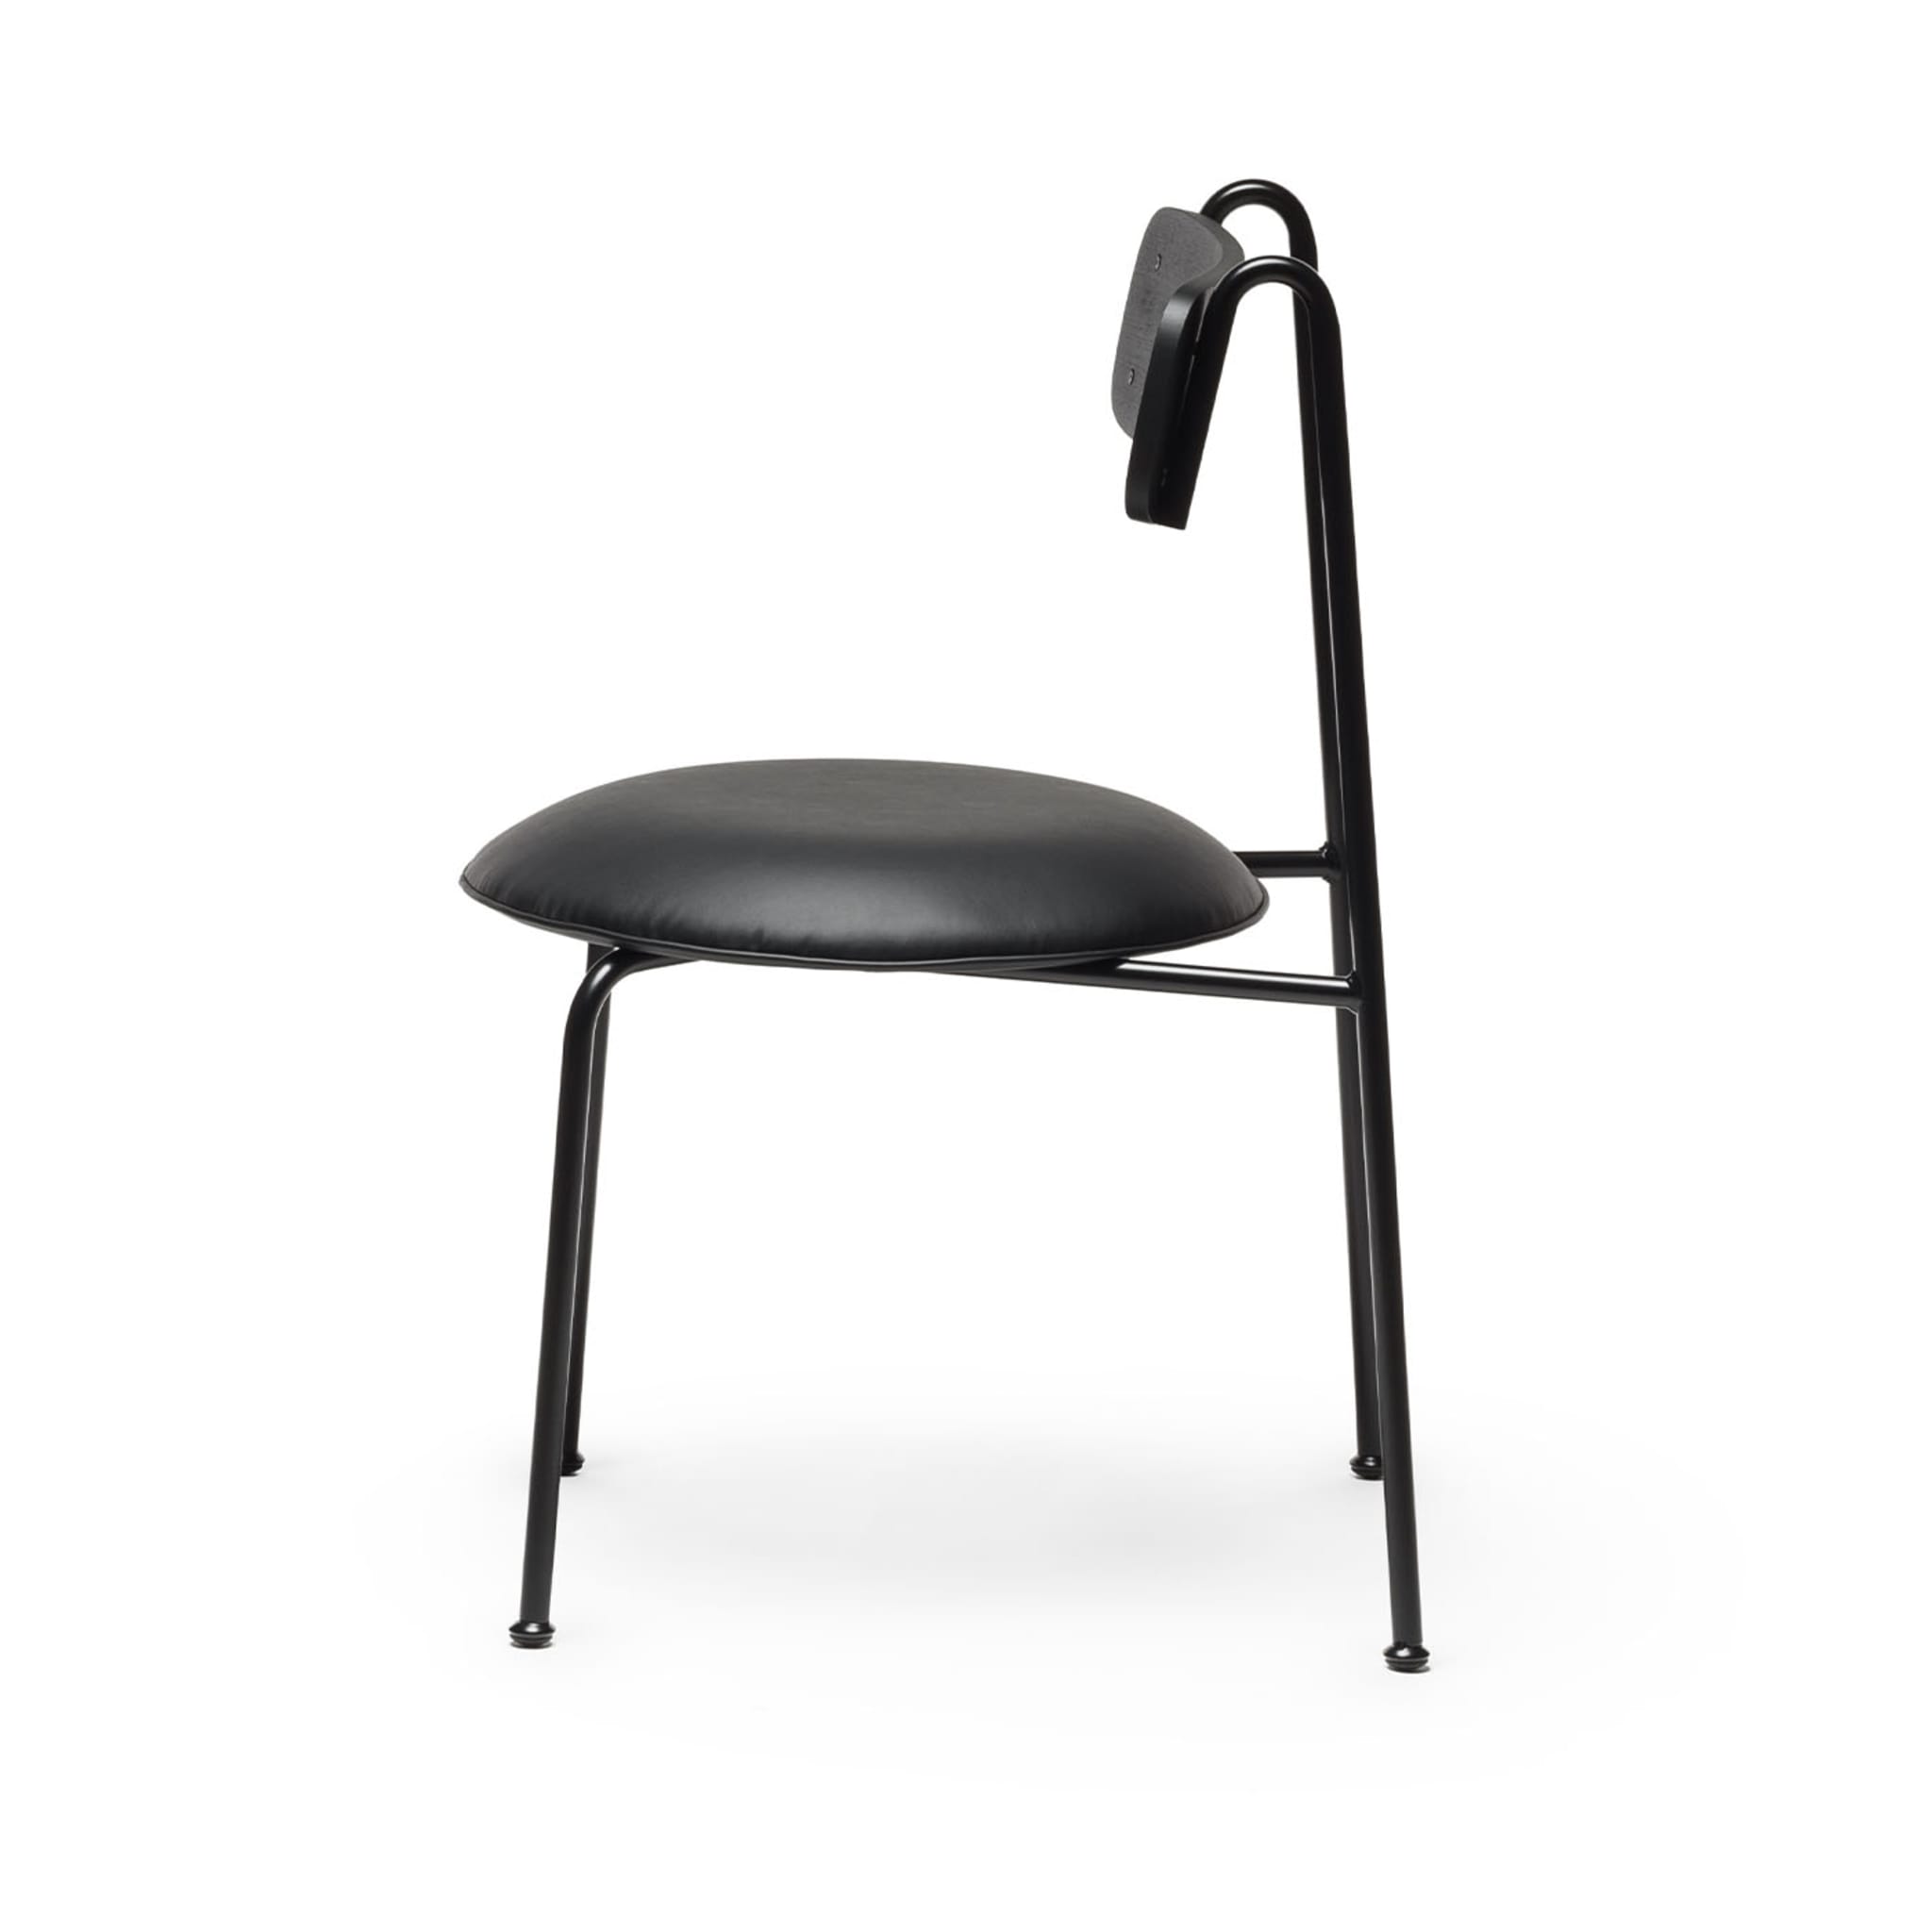 Lena S Black Chair By Designerd - Alternative view 4